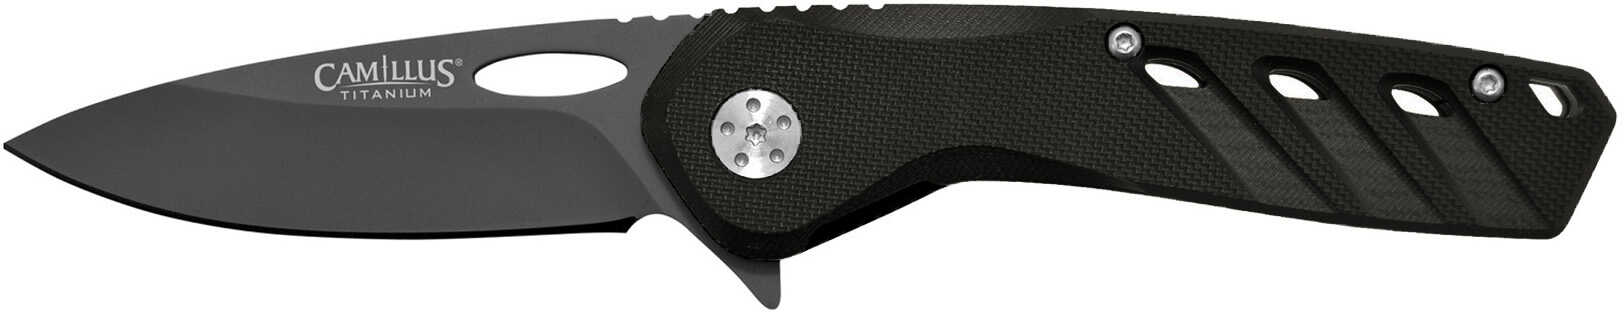 Camillus SLOT 6.75 inch Folding Knife 2.75 in Blade - Black